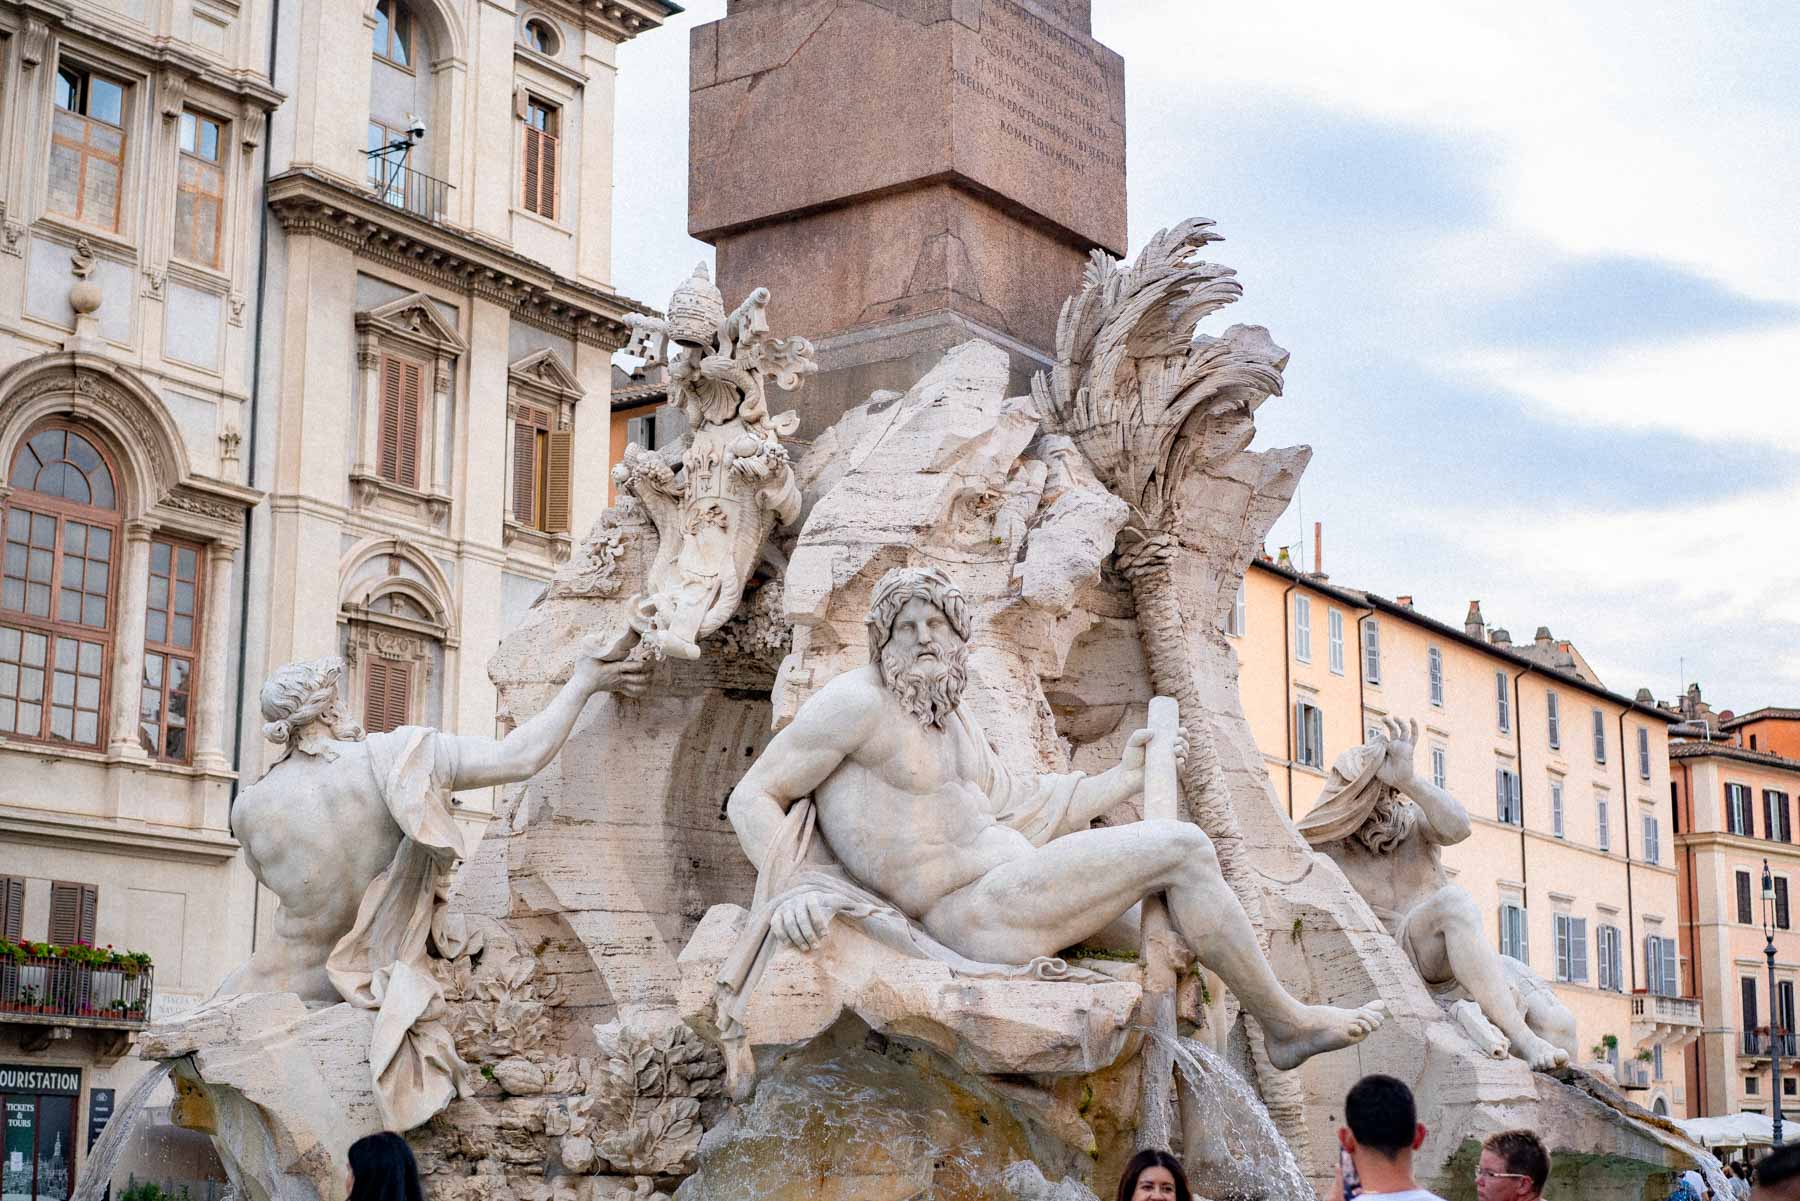 Piazza Navona fountain Rome
famous fountain in Rome